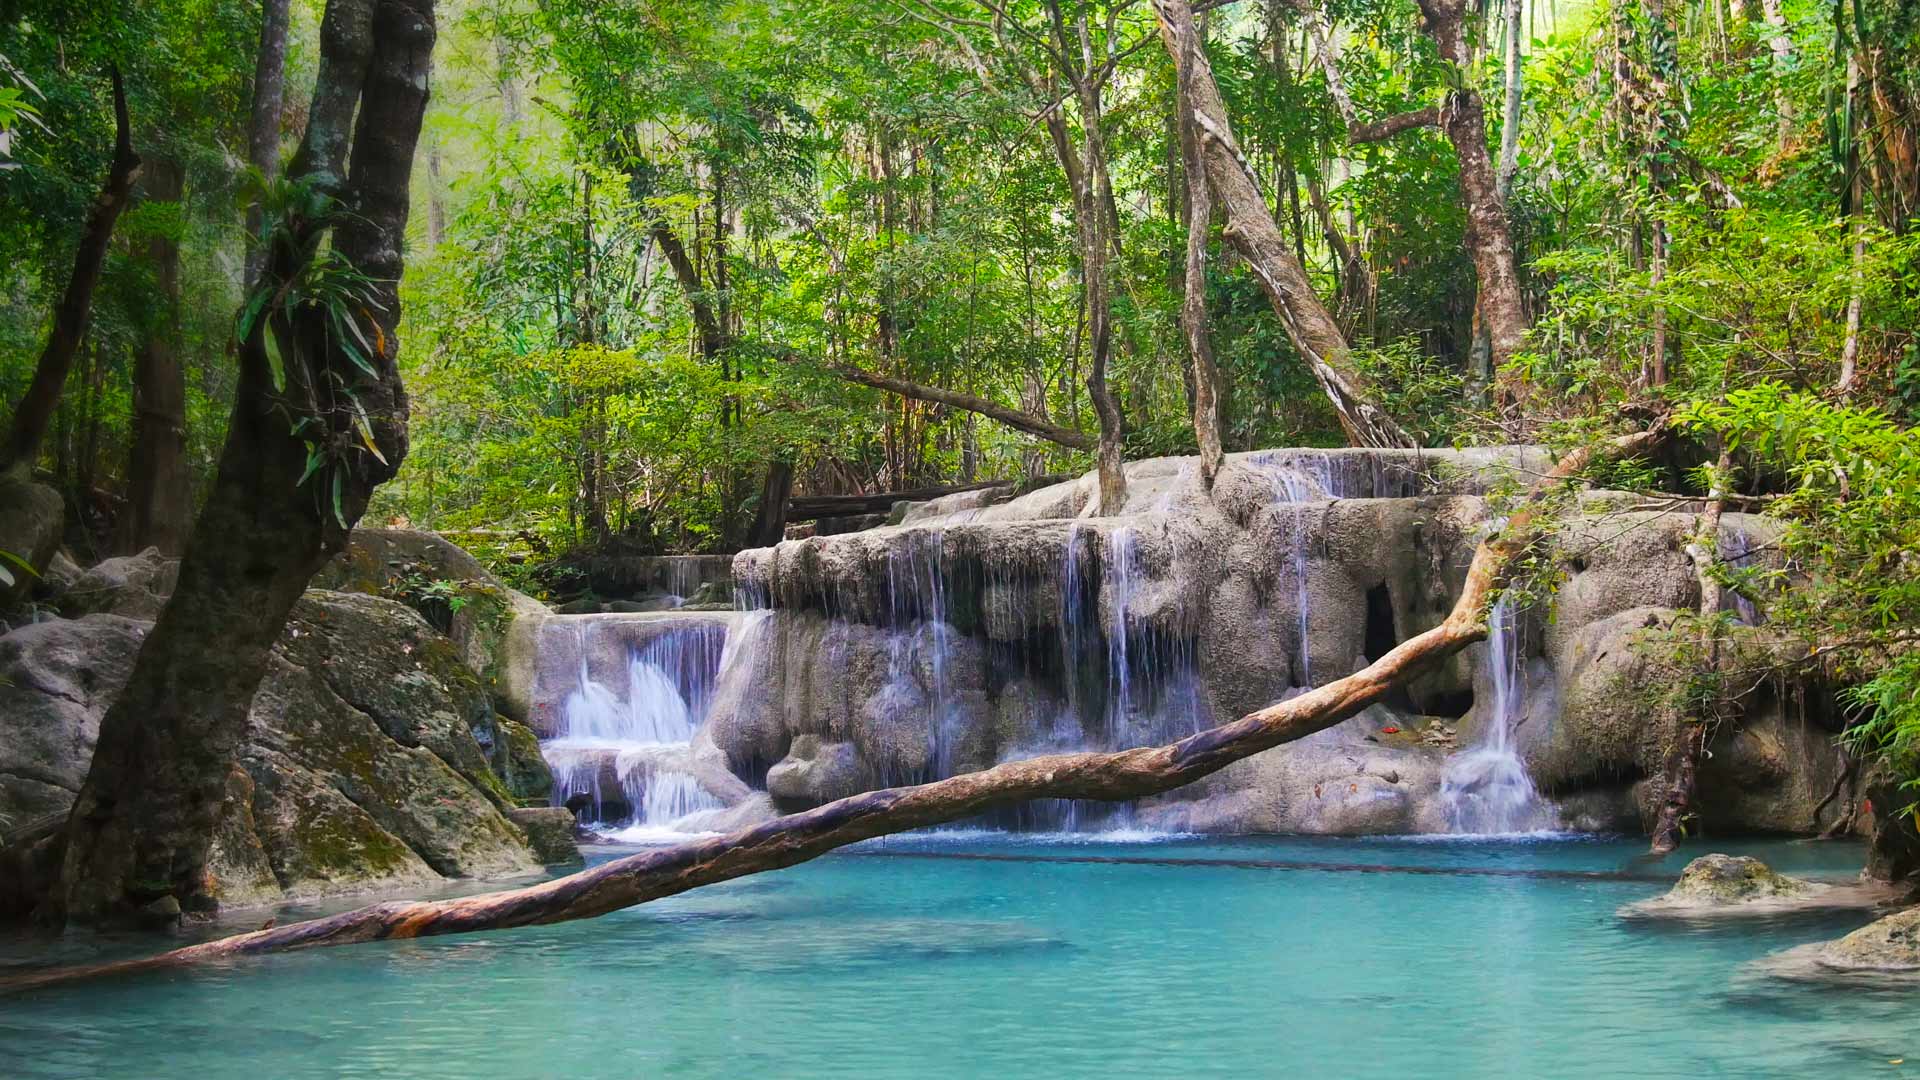 Thailand Waterfall